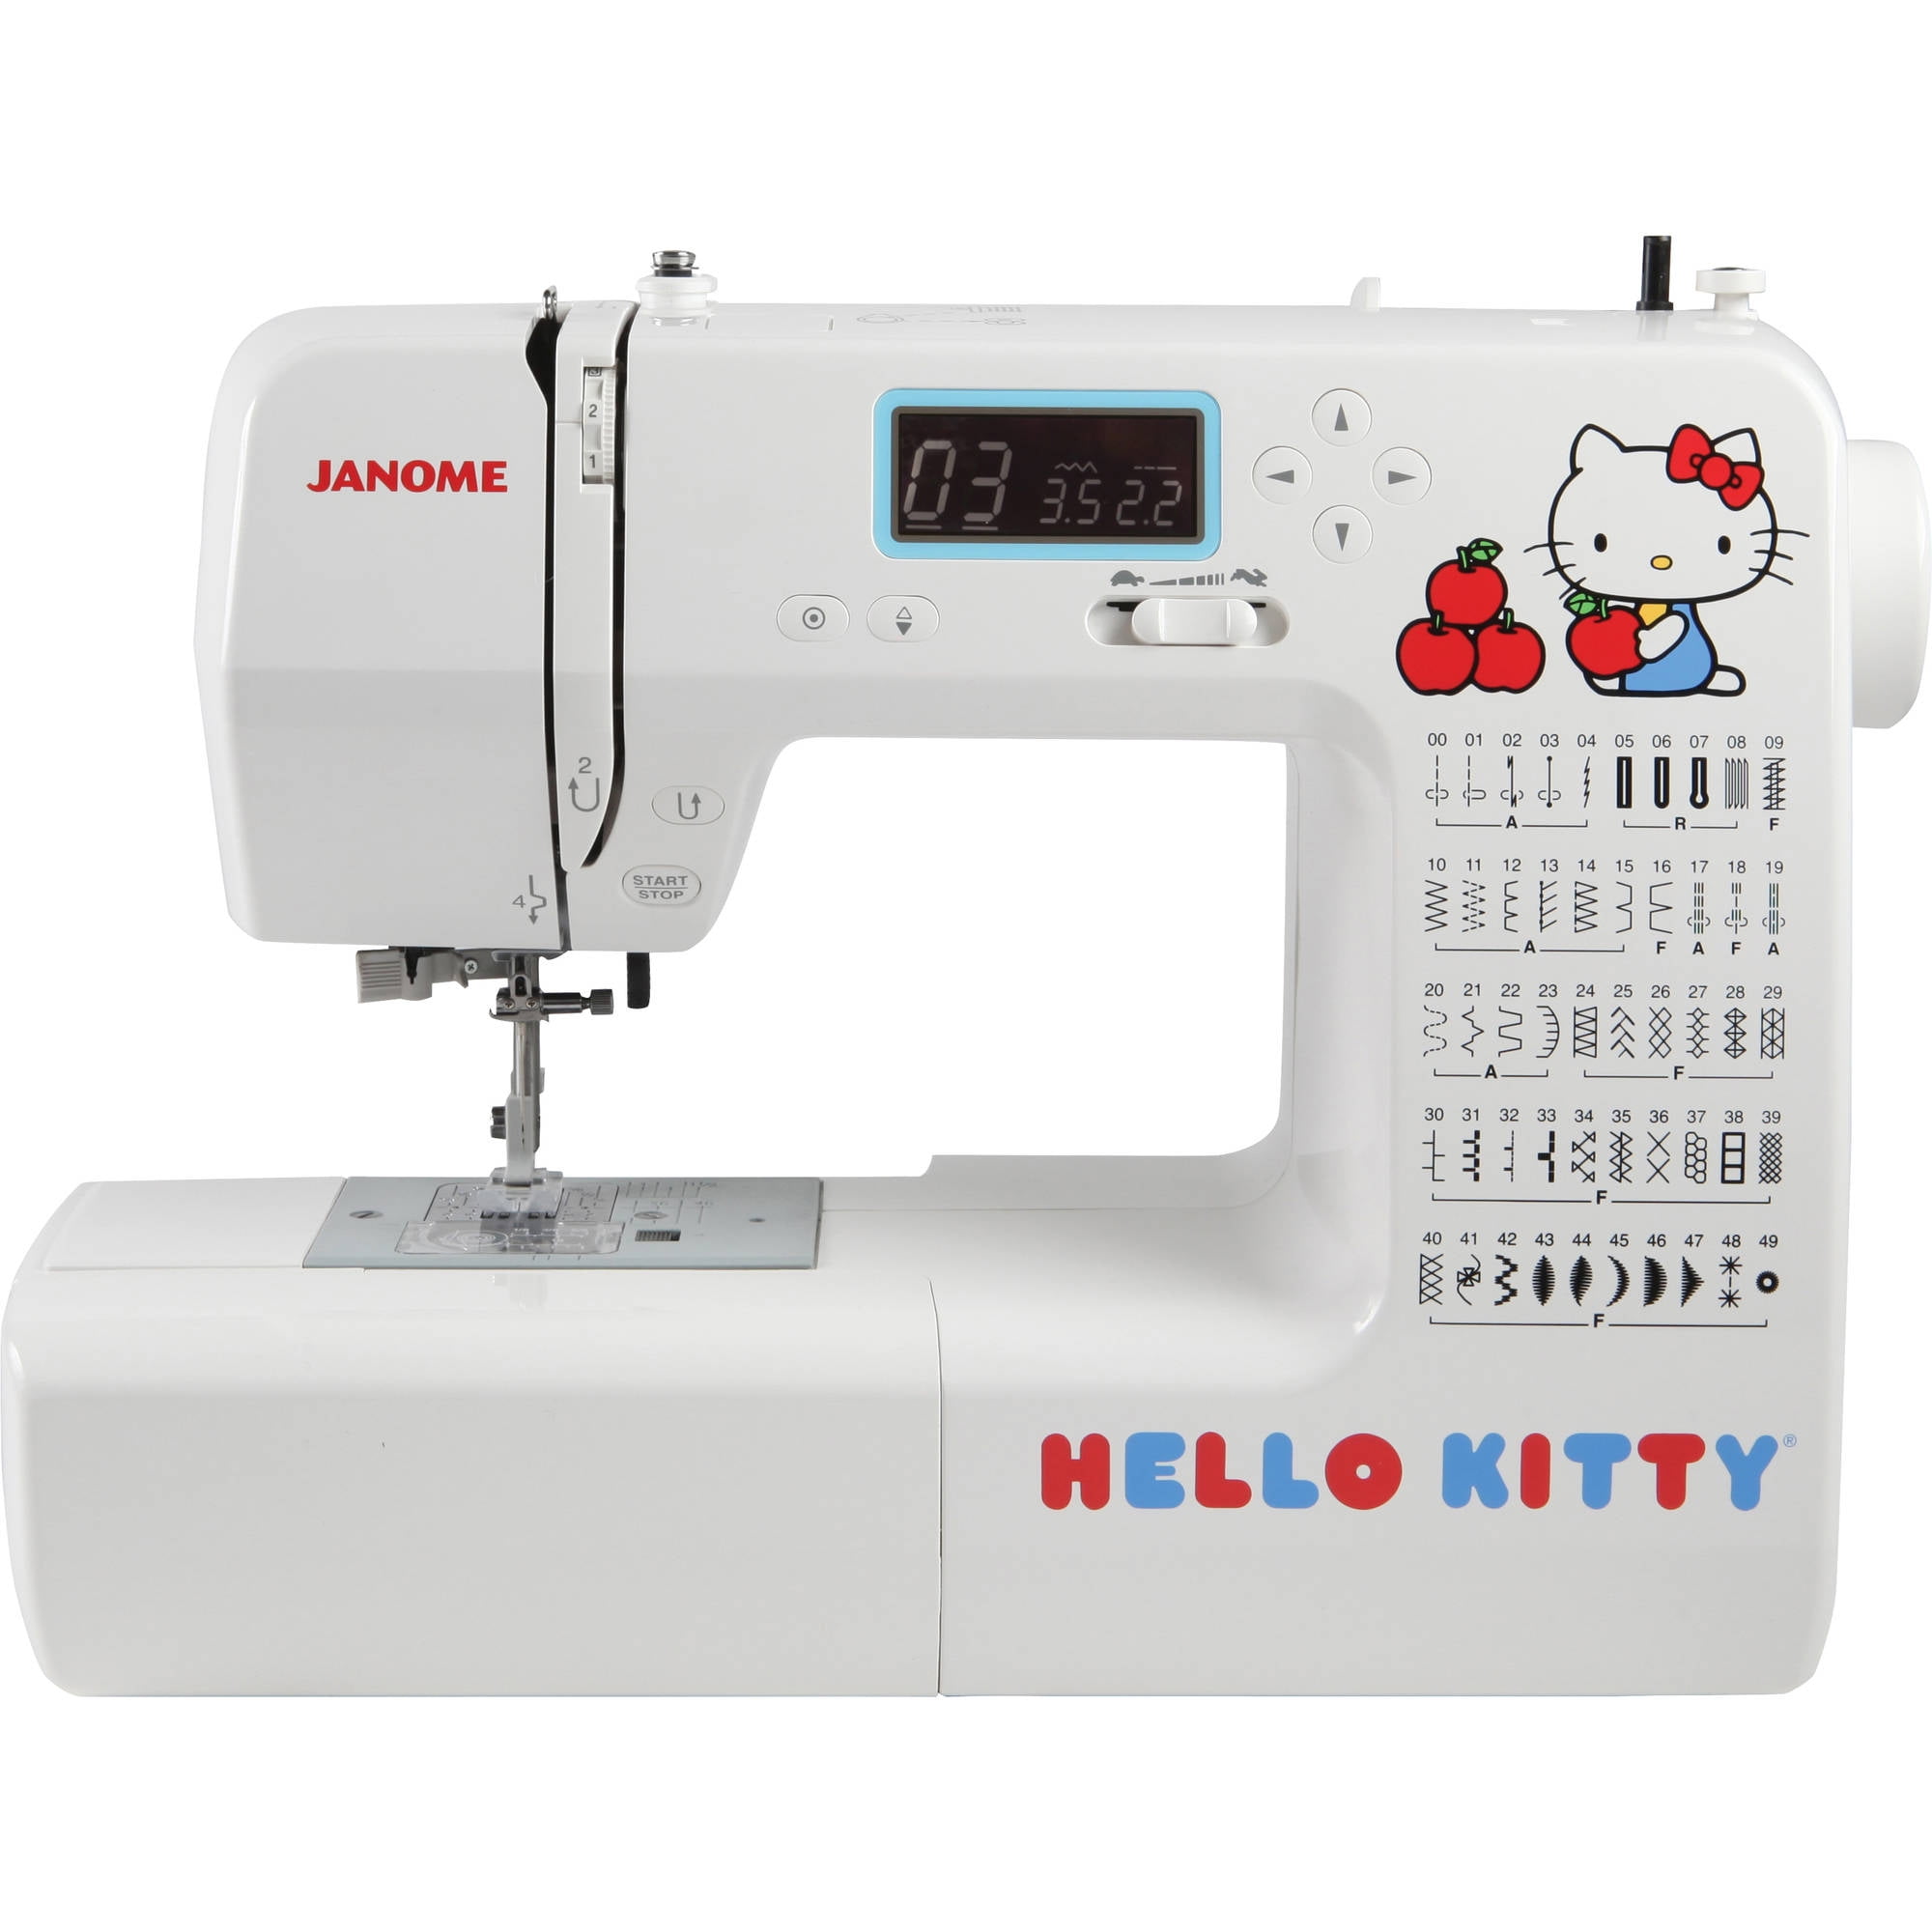 JANOME Hello Kitty Sewing Machine RED Polka-dot - Sanrio Japan